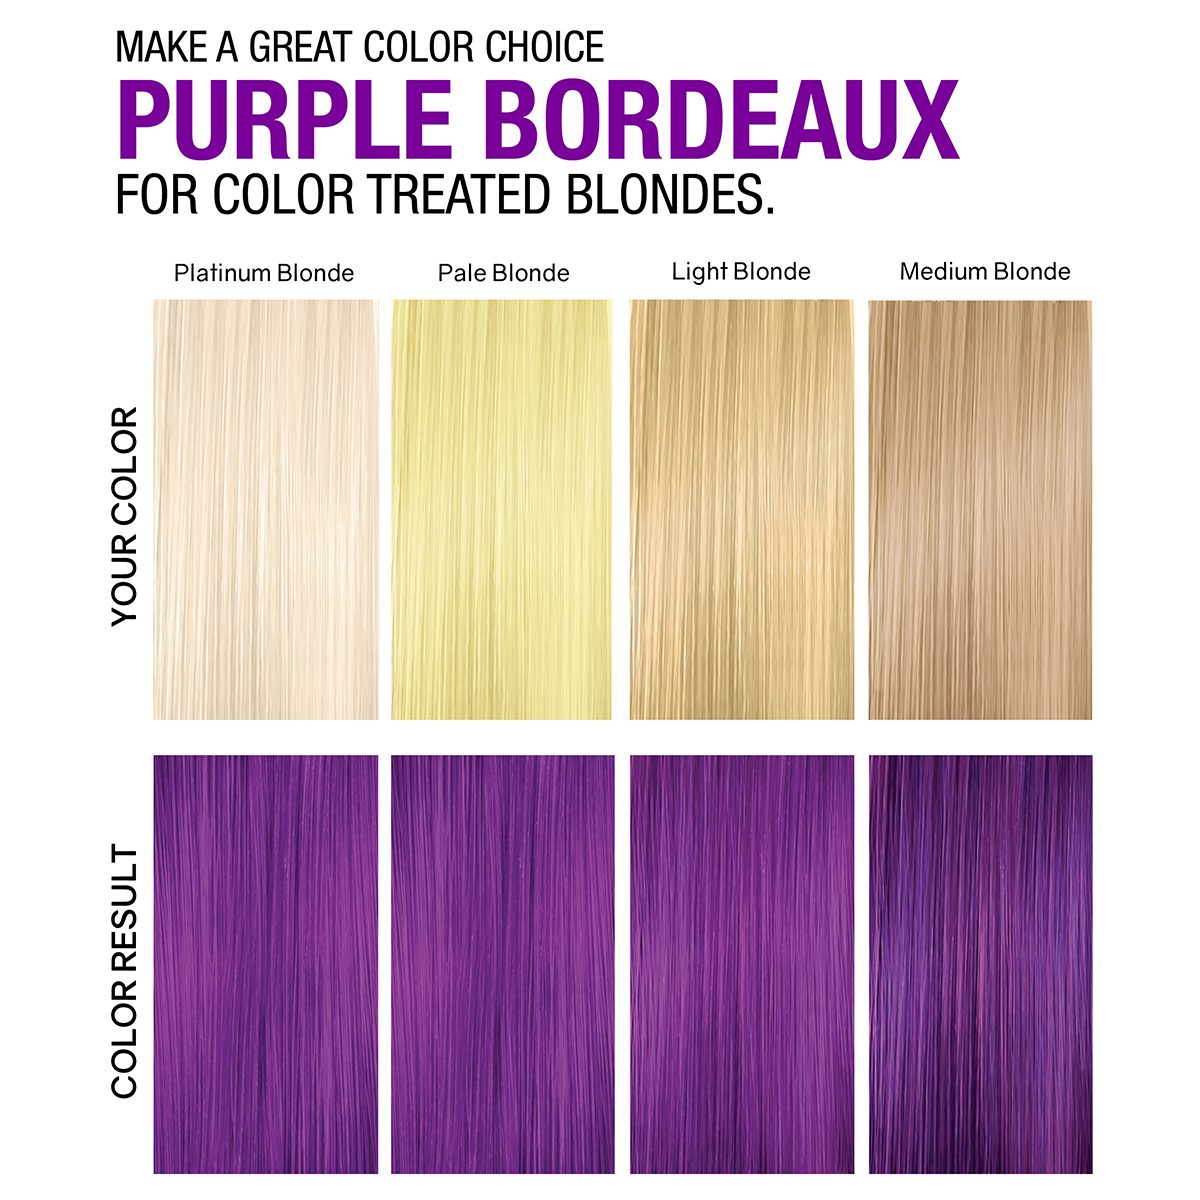 Purple Bordeaux for color treated blondes.